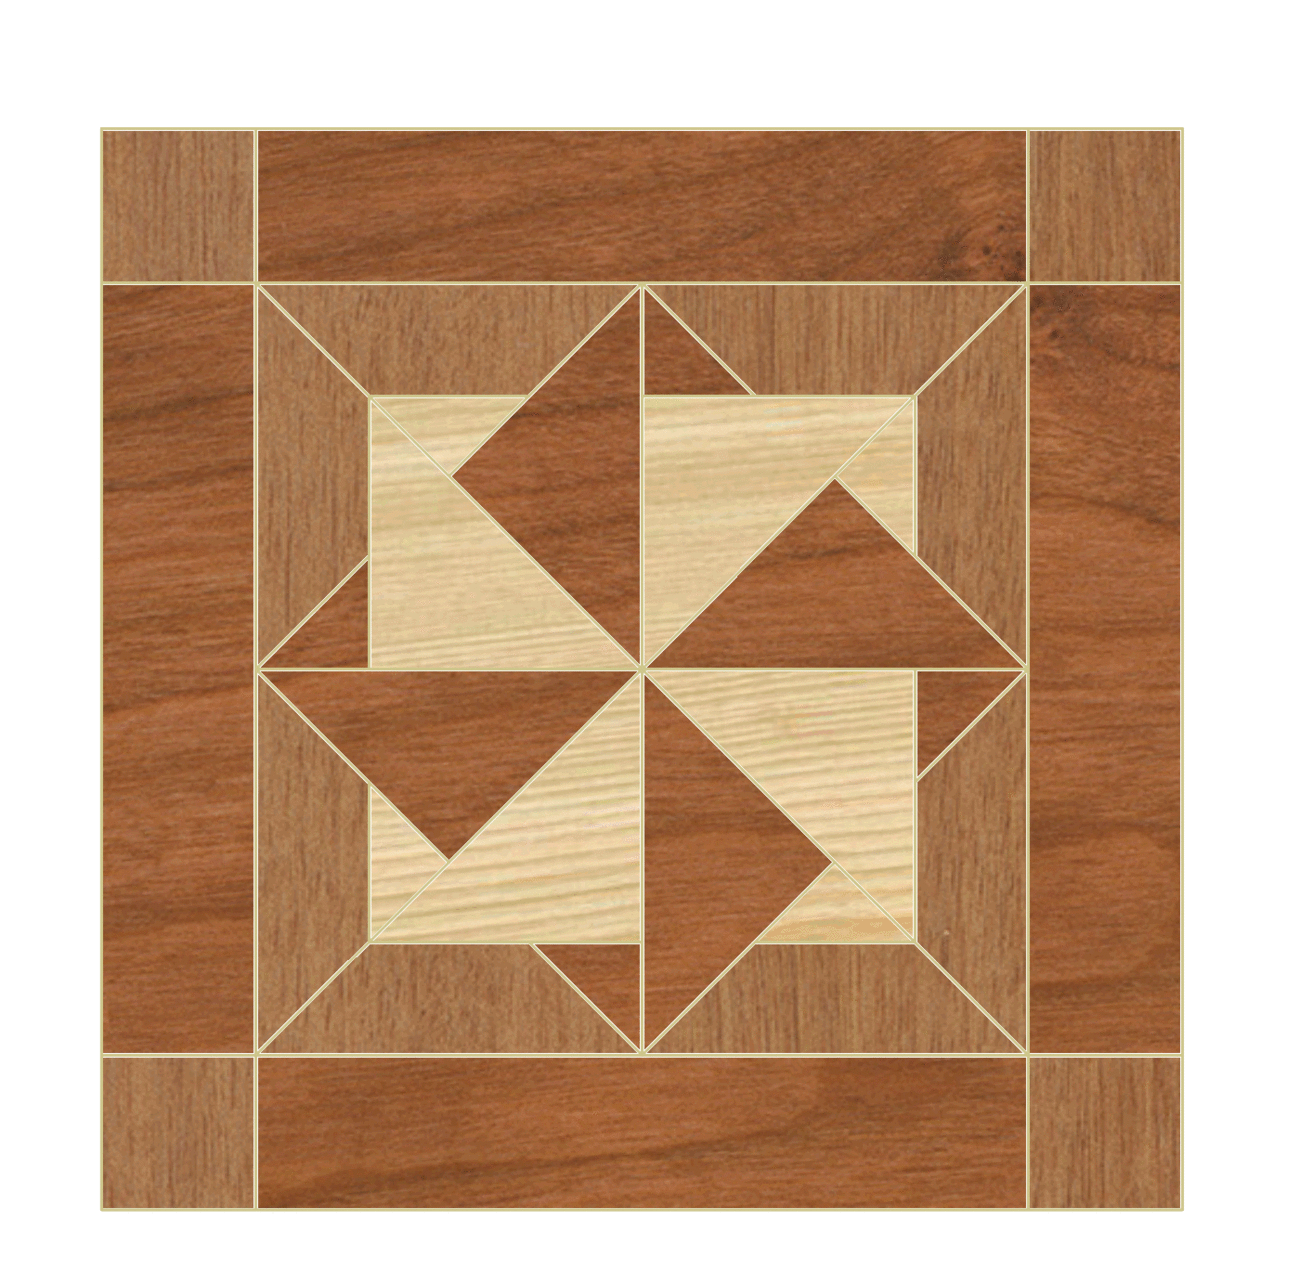 Woodworking quilt patterns